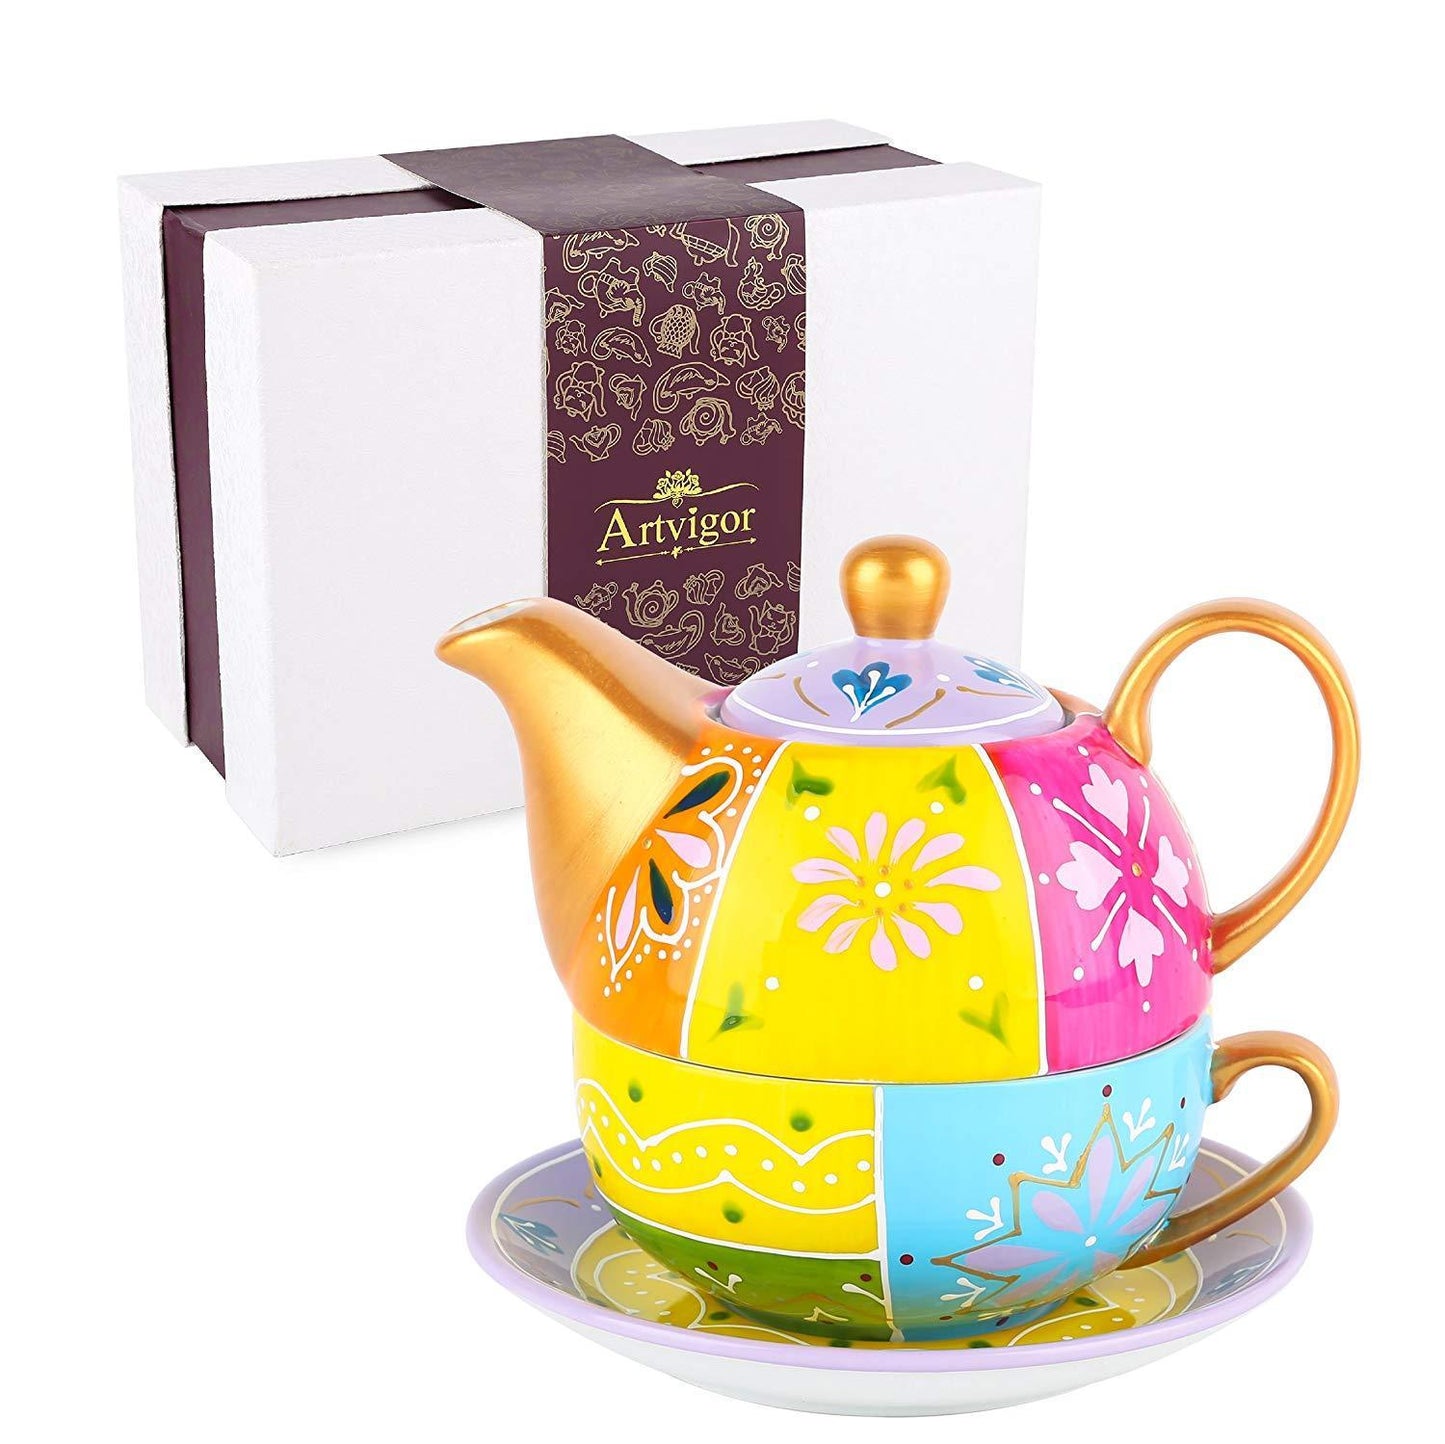 Tea for Two Travel Set – ArtfulTea